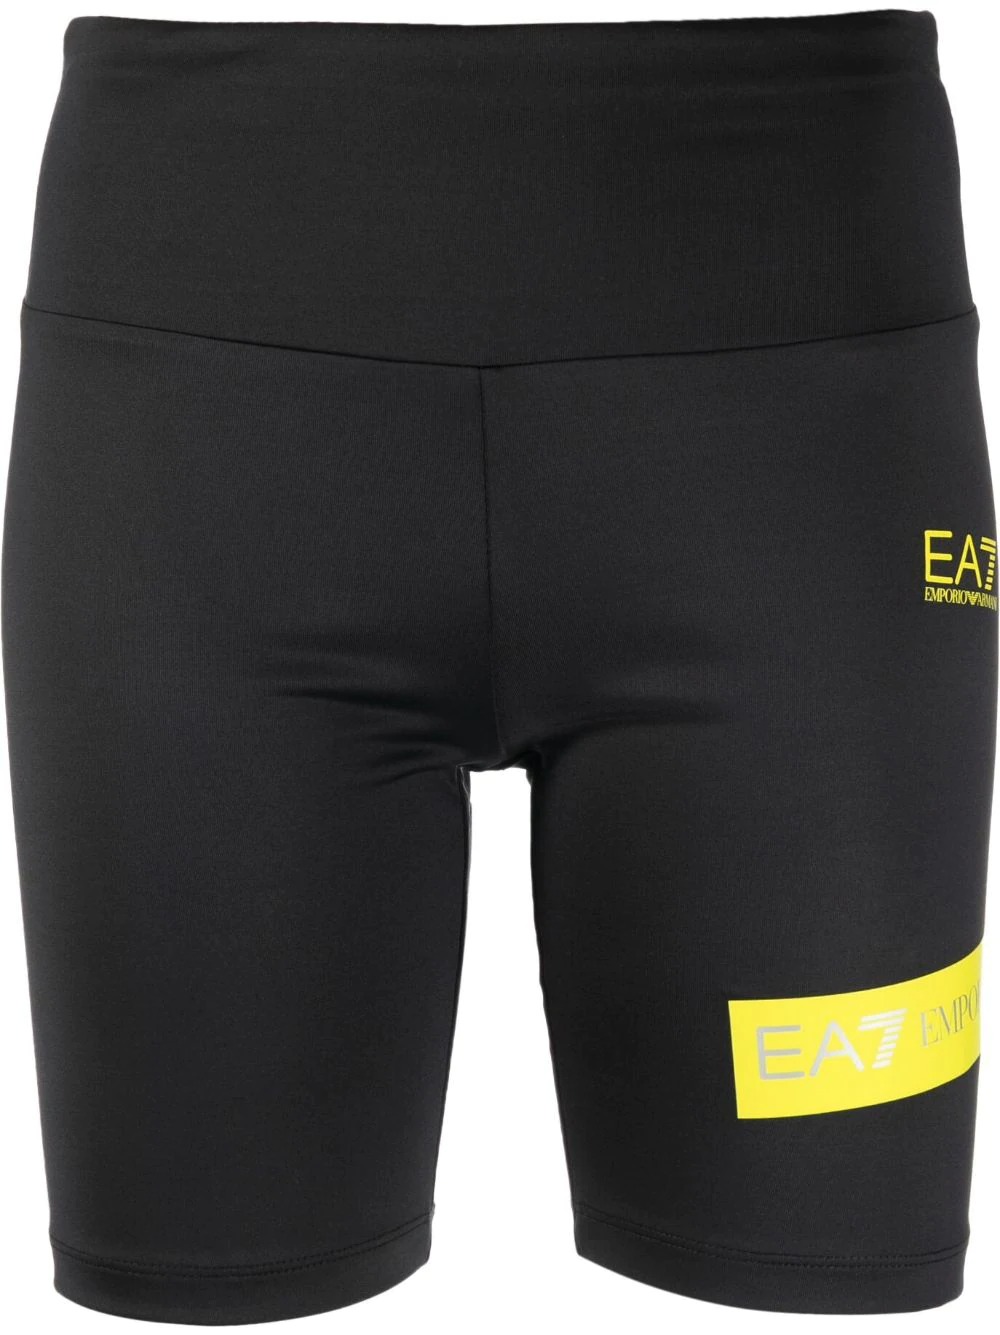 Шорты EA7 Emporio Armani 3LTS58-TJCTZ Shorts Black